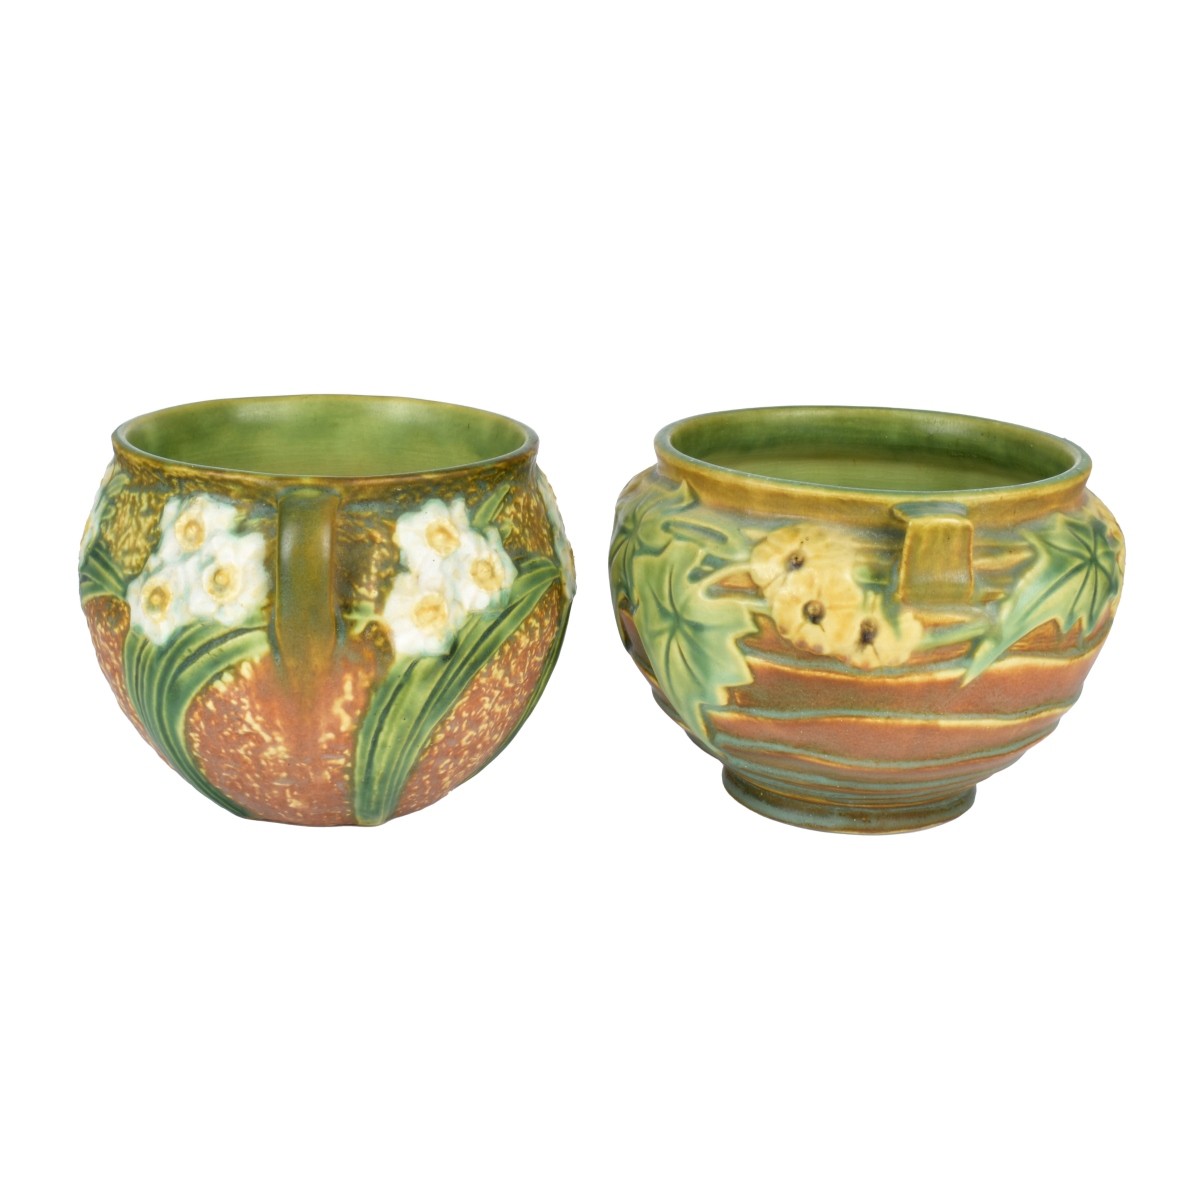 Two Antique Roseville Pottery vases